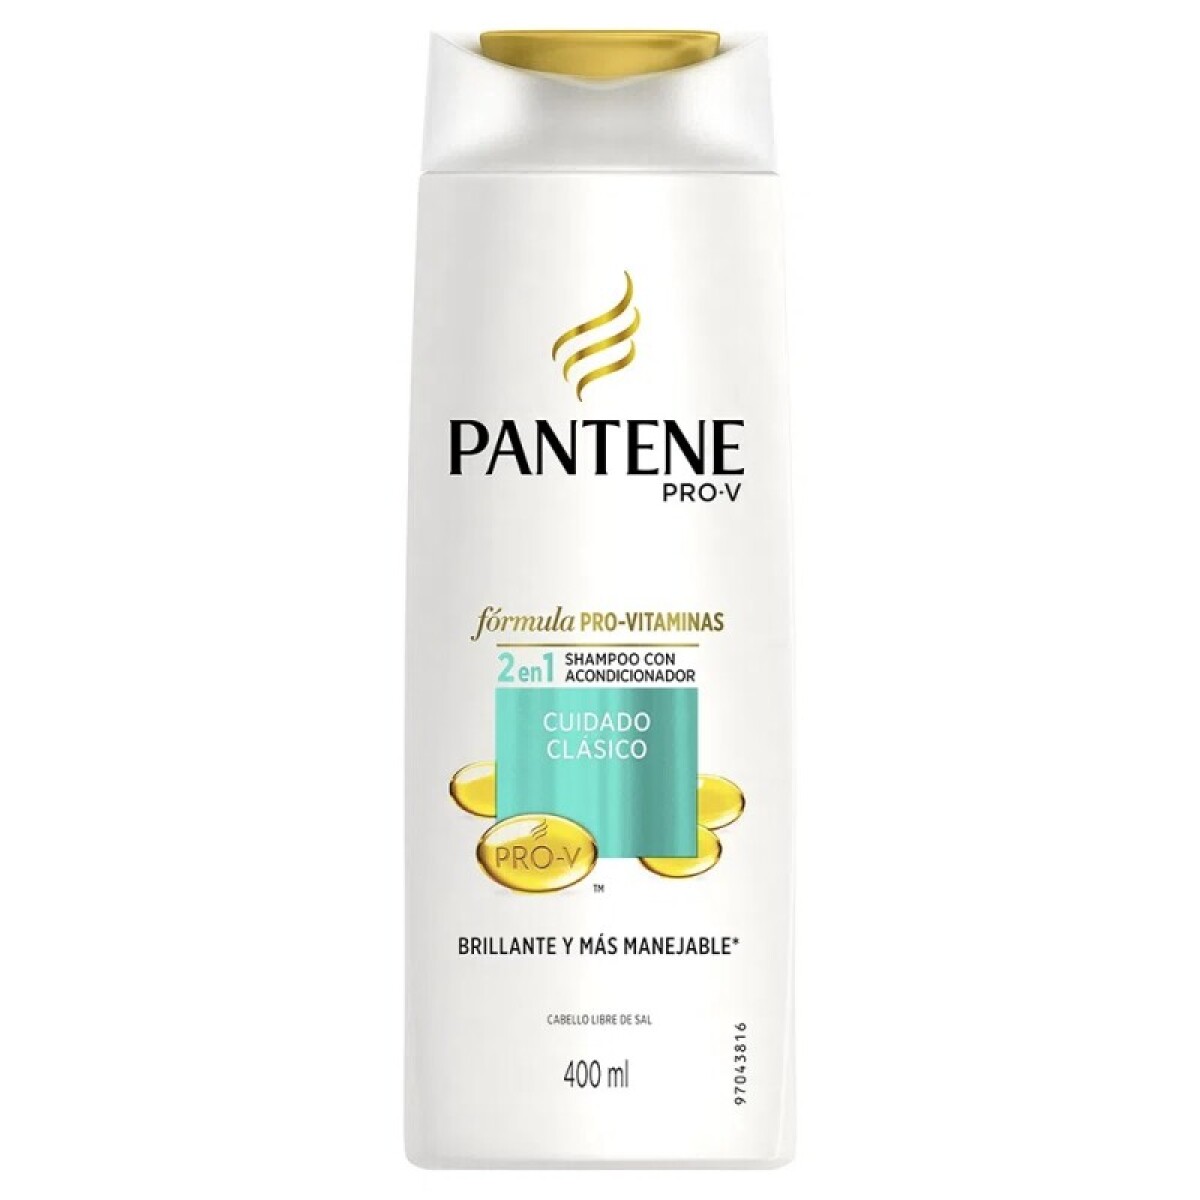 Pantene Shampoo 2 en 1 Cuidado Clásico 400 ml 